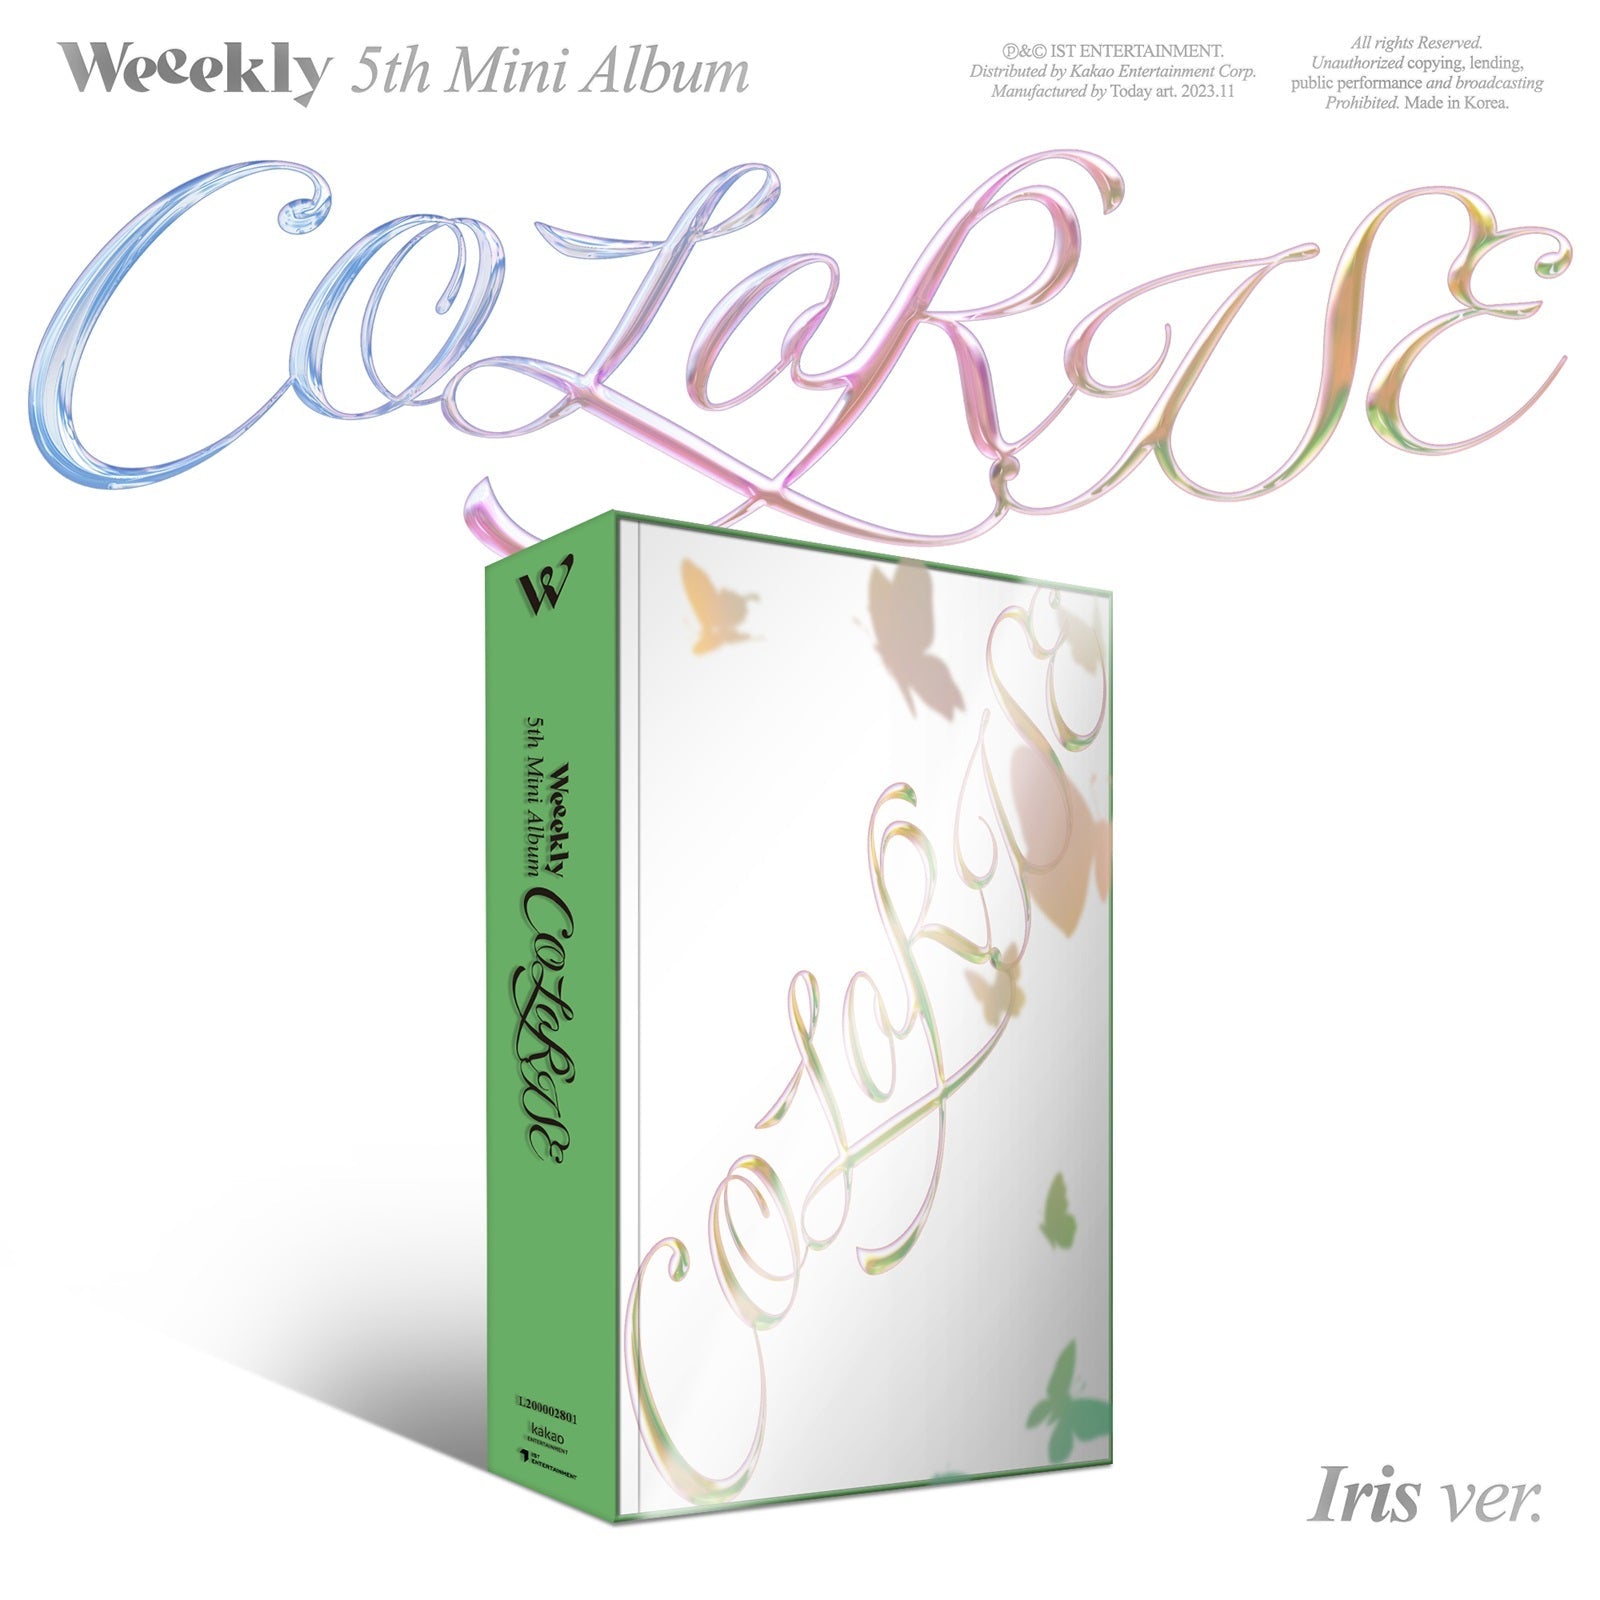 WEEEKLY 5TH MINI ALBUM 'COLORISE' IRIS VERSION COVER